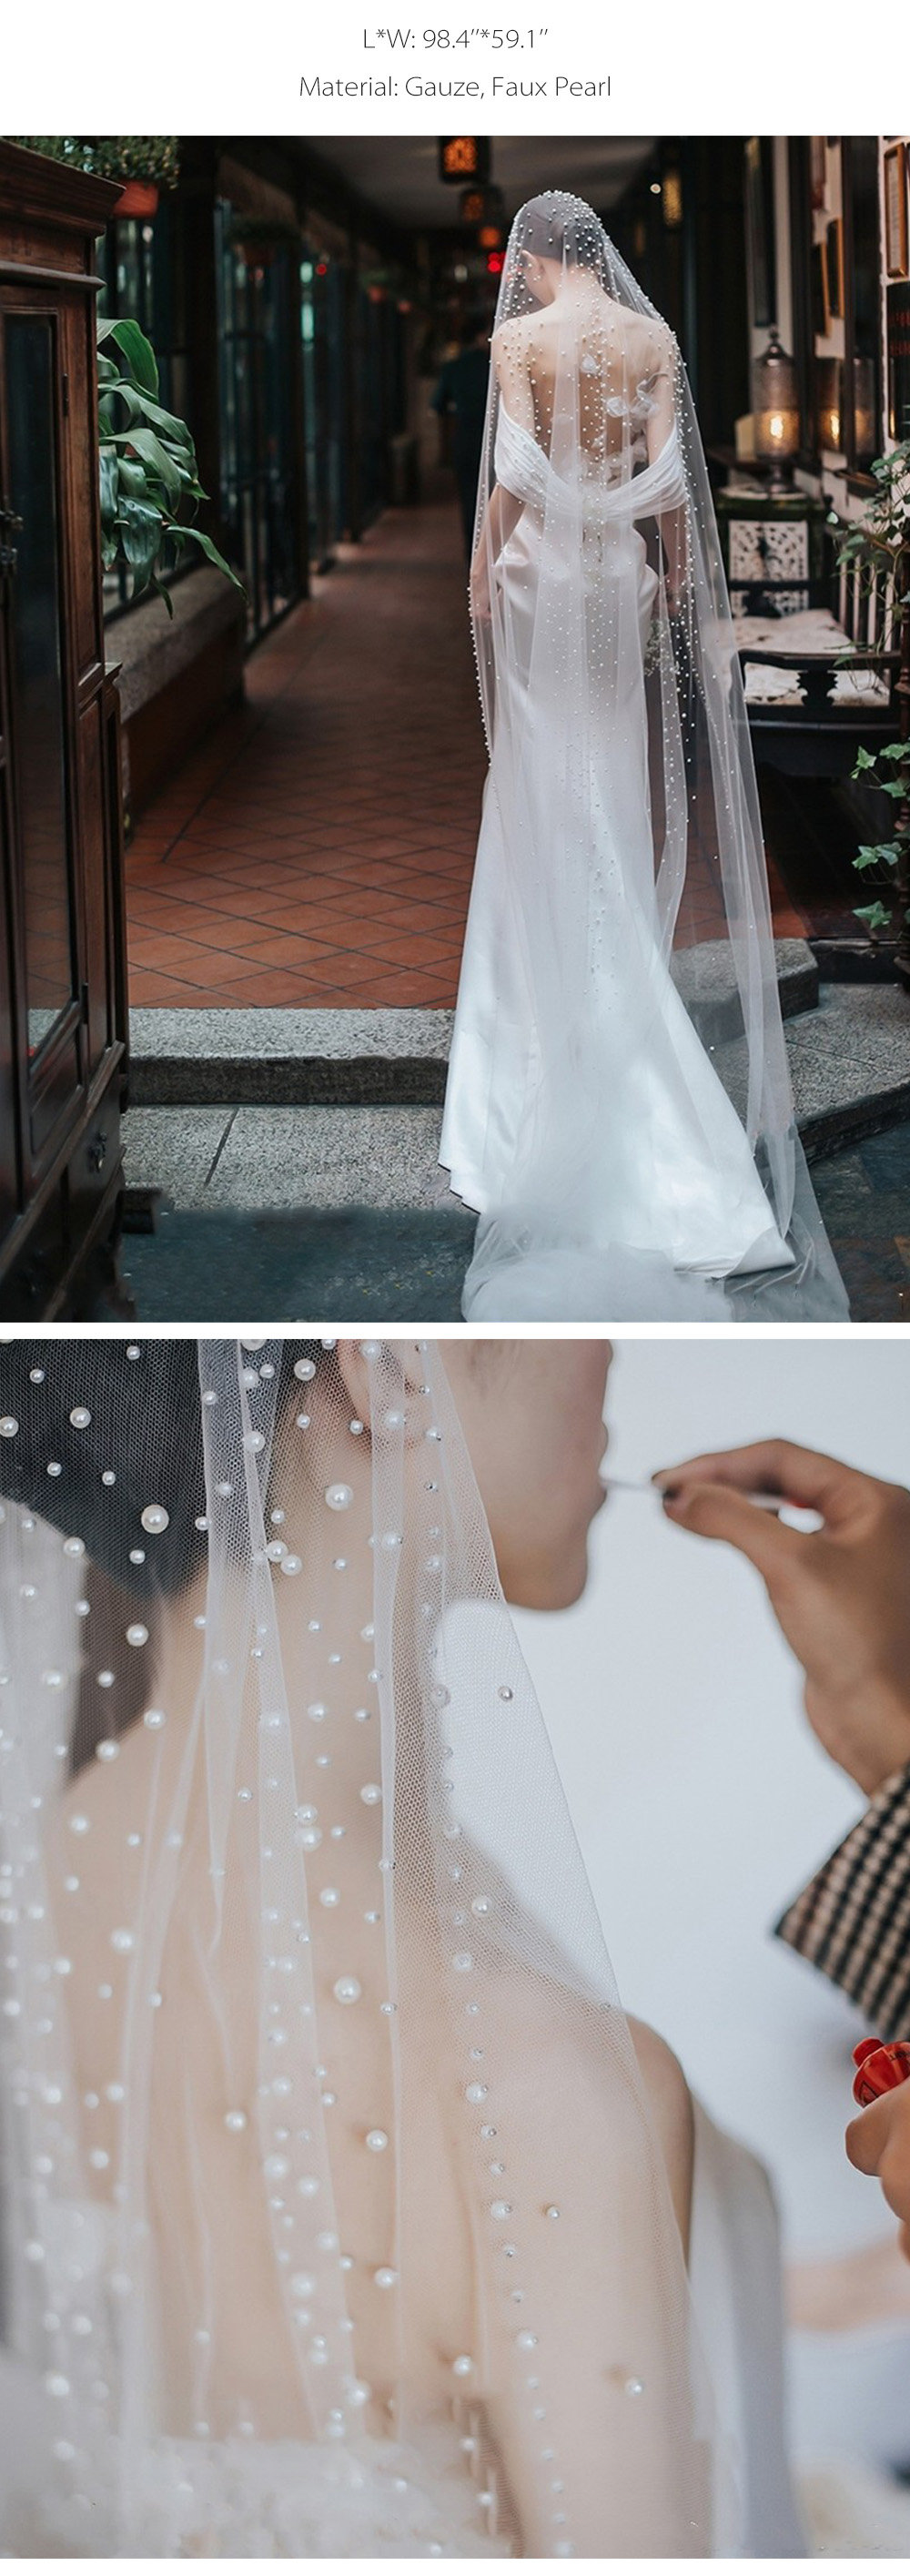 Zapaka Women Wedding Veils Two Tier Pearl Bridal Veils Wedding Accessories